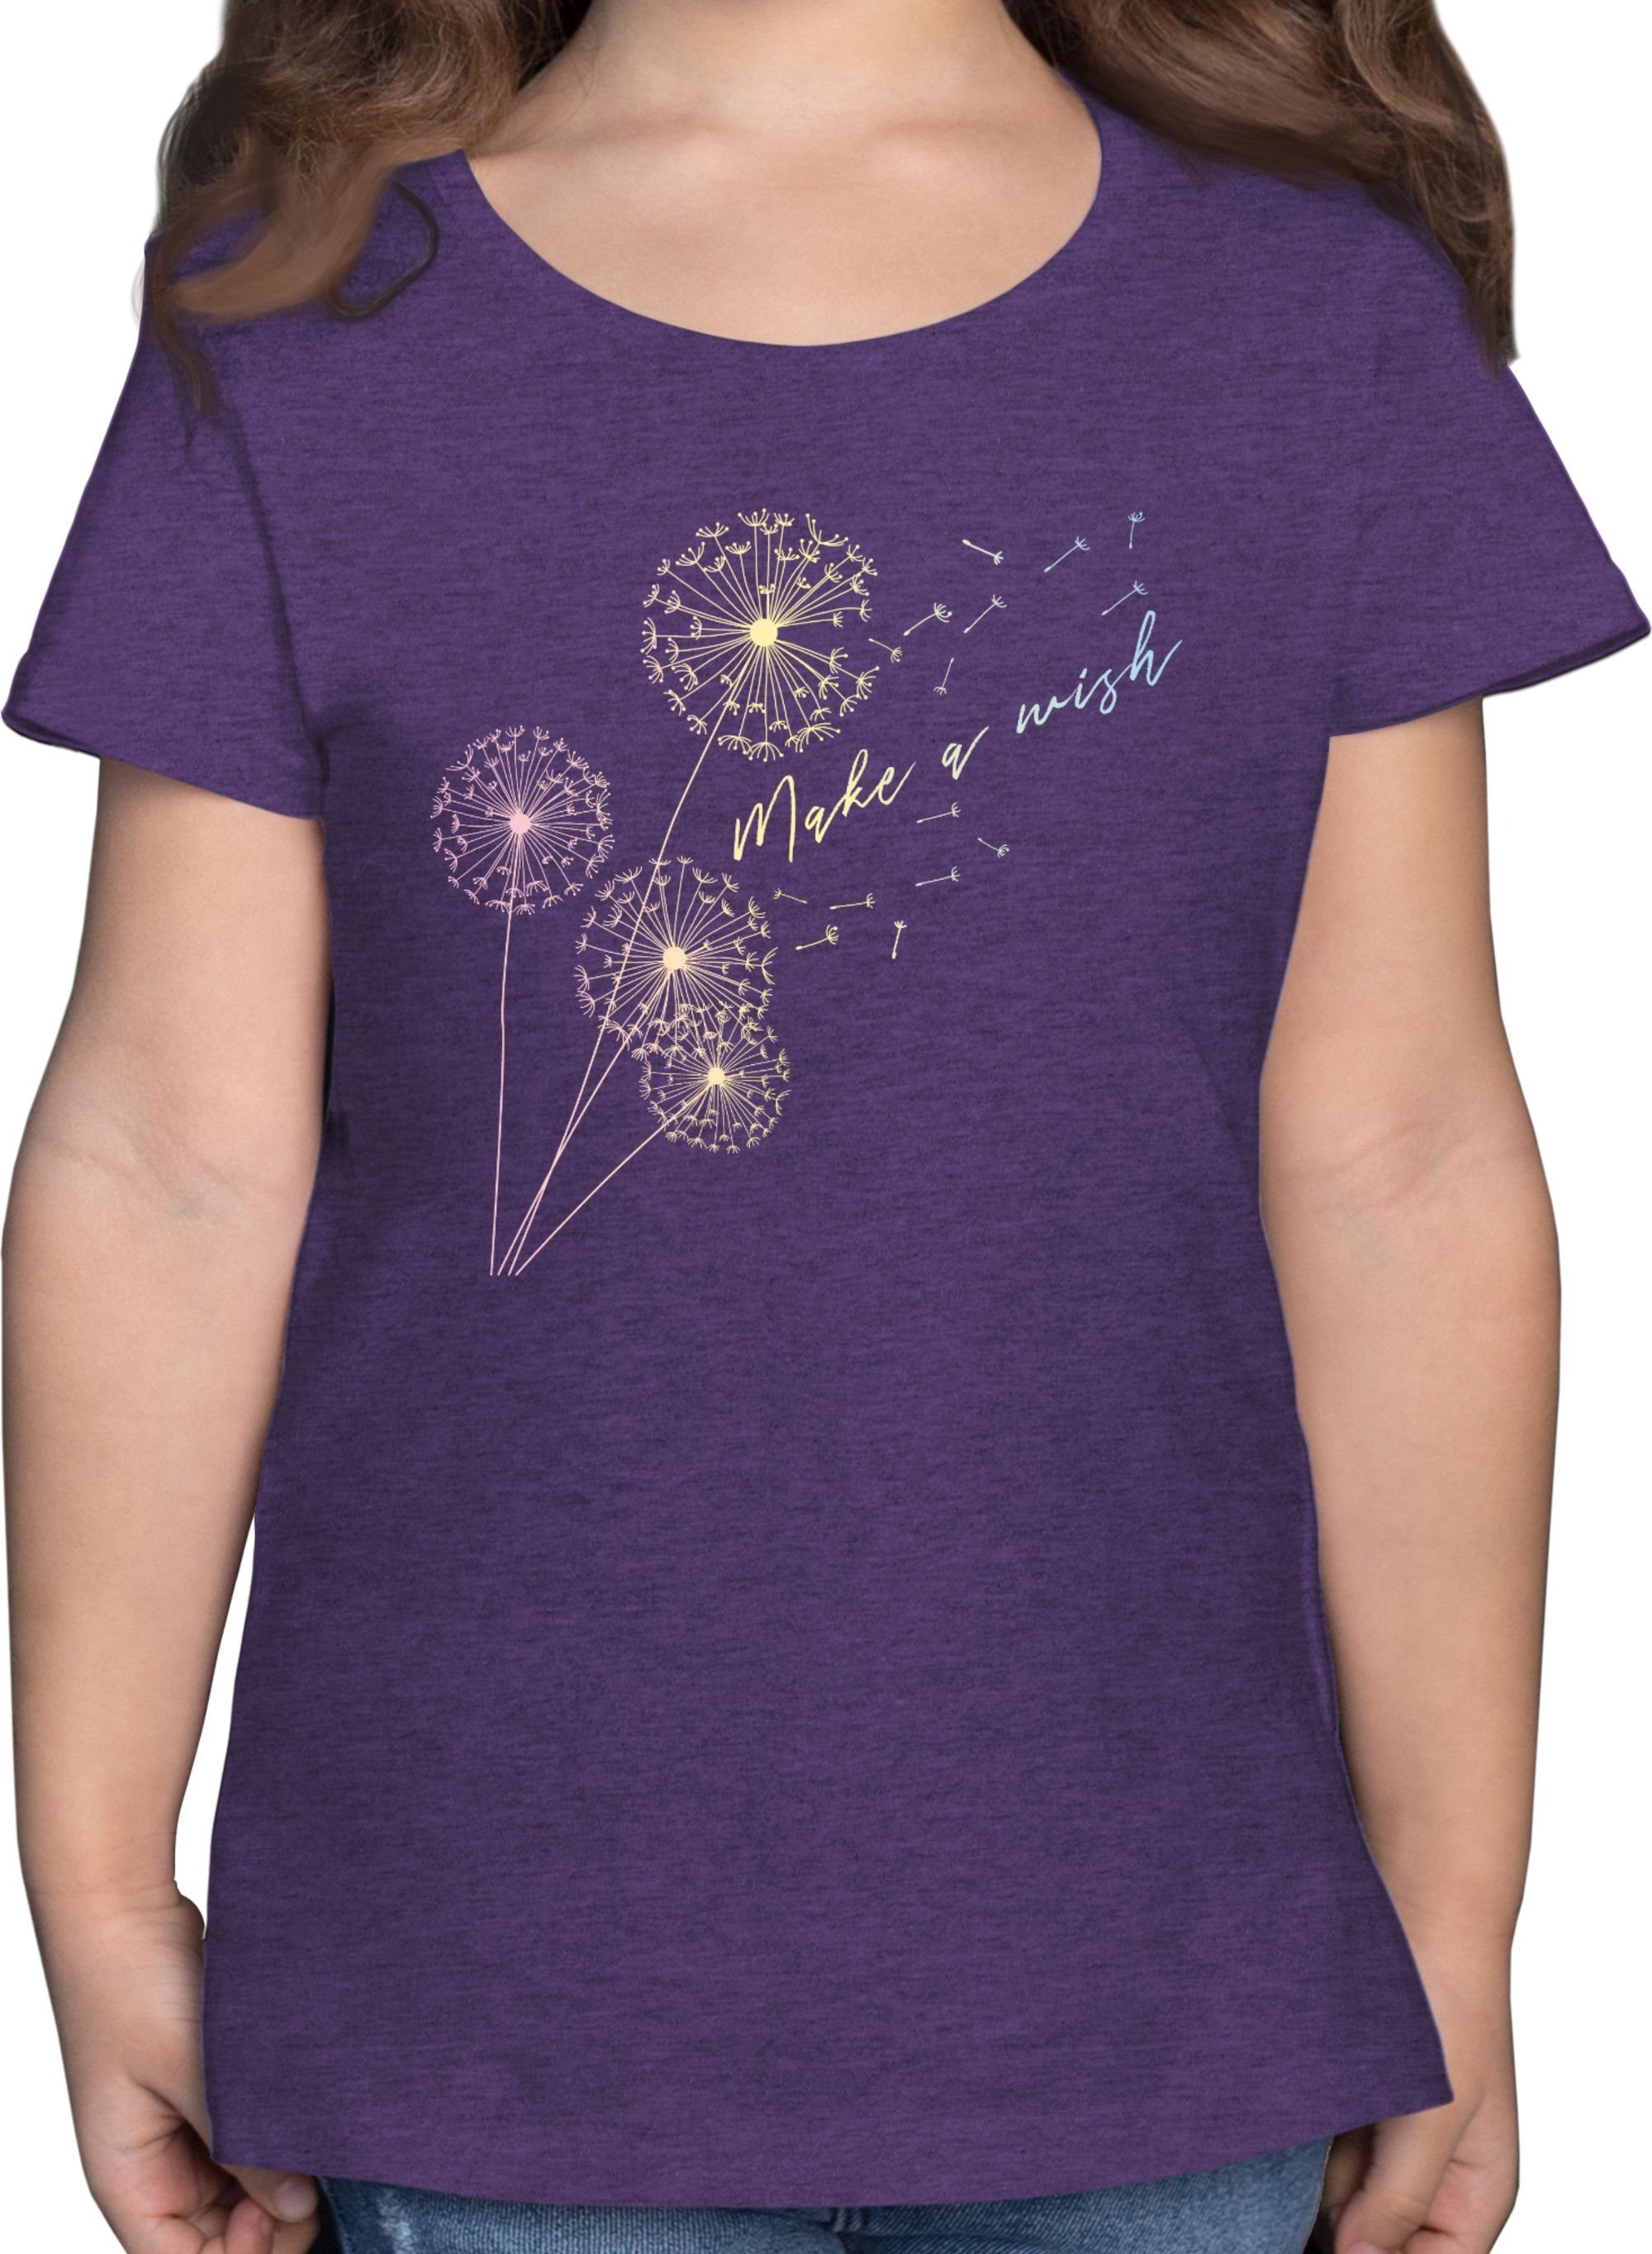 Shirtracer T-Shirt Pusteblume Flower Kinderkleidung und Co 1 Lila Meliert